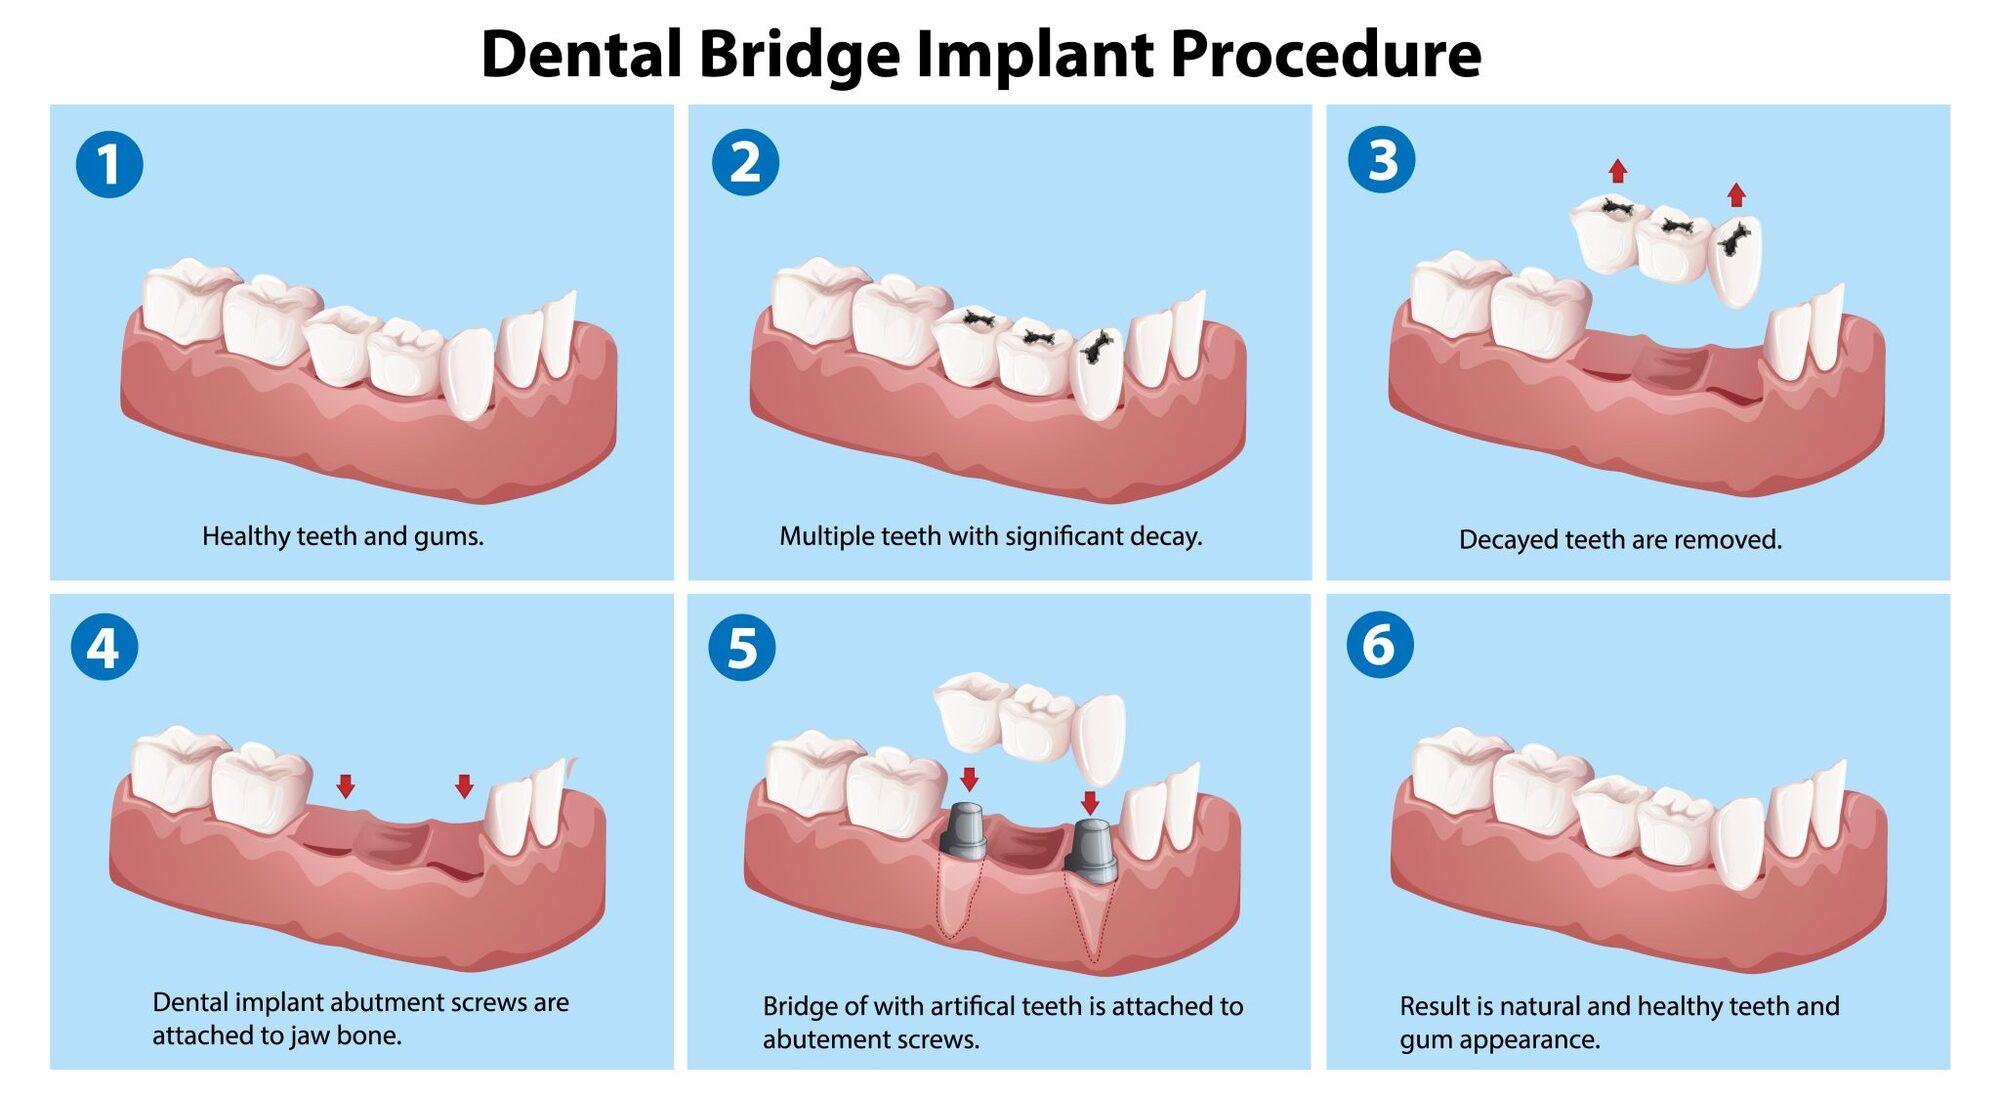 Dental bridge implant procedure